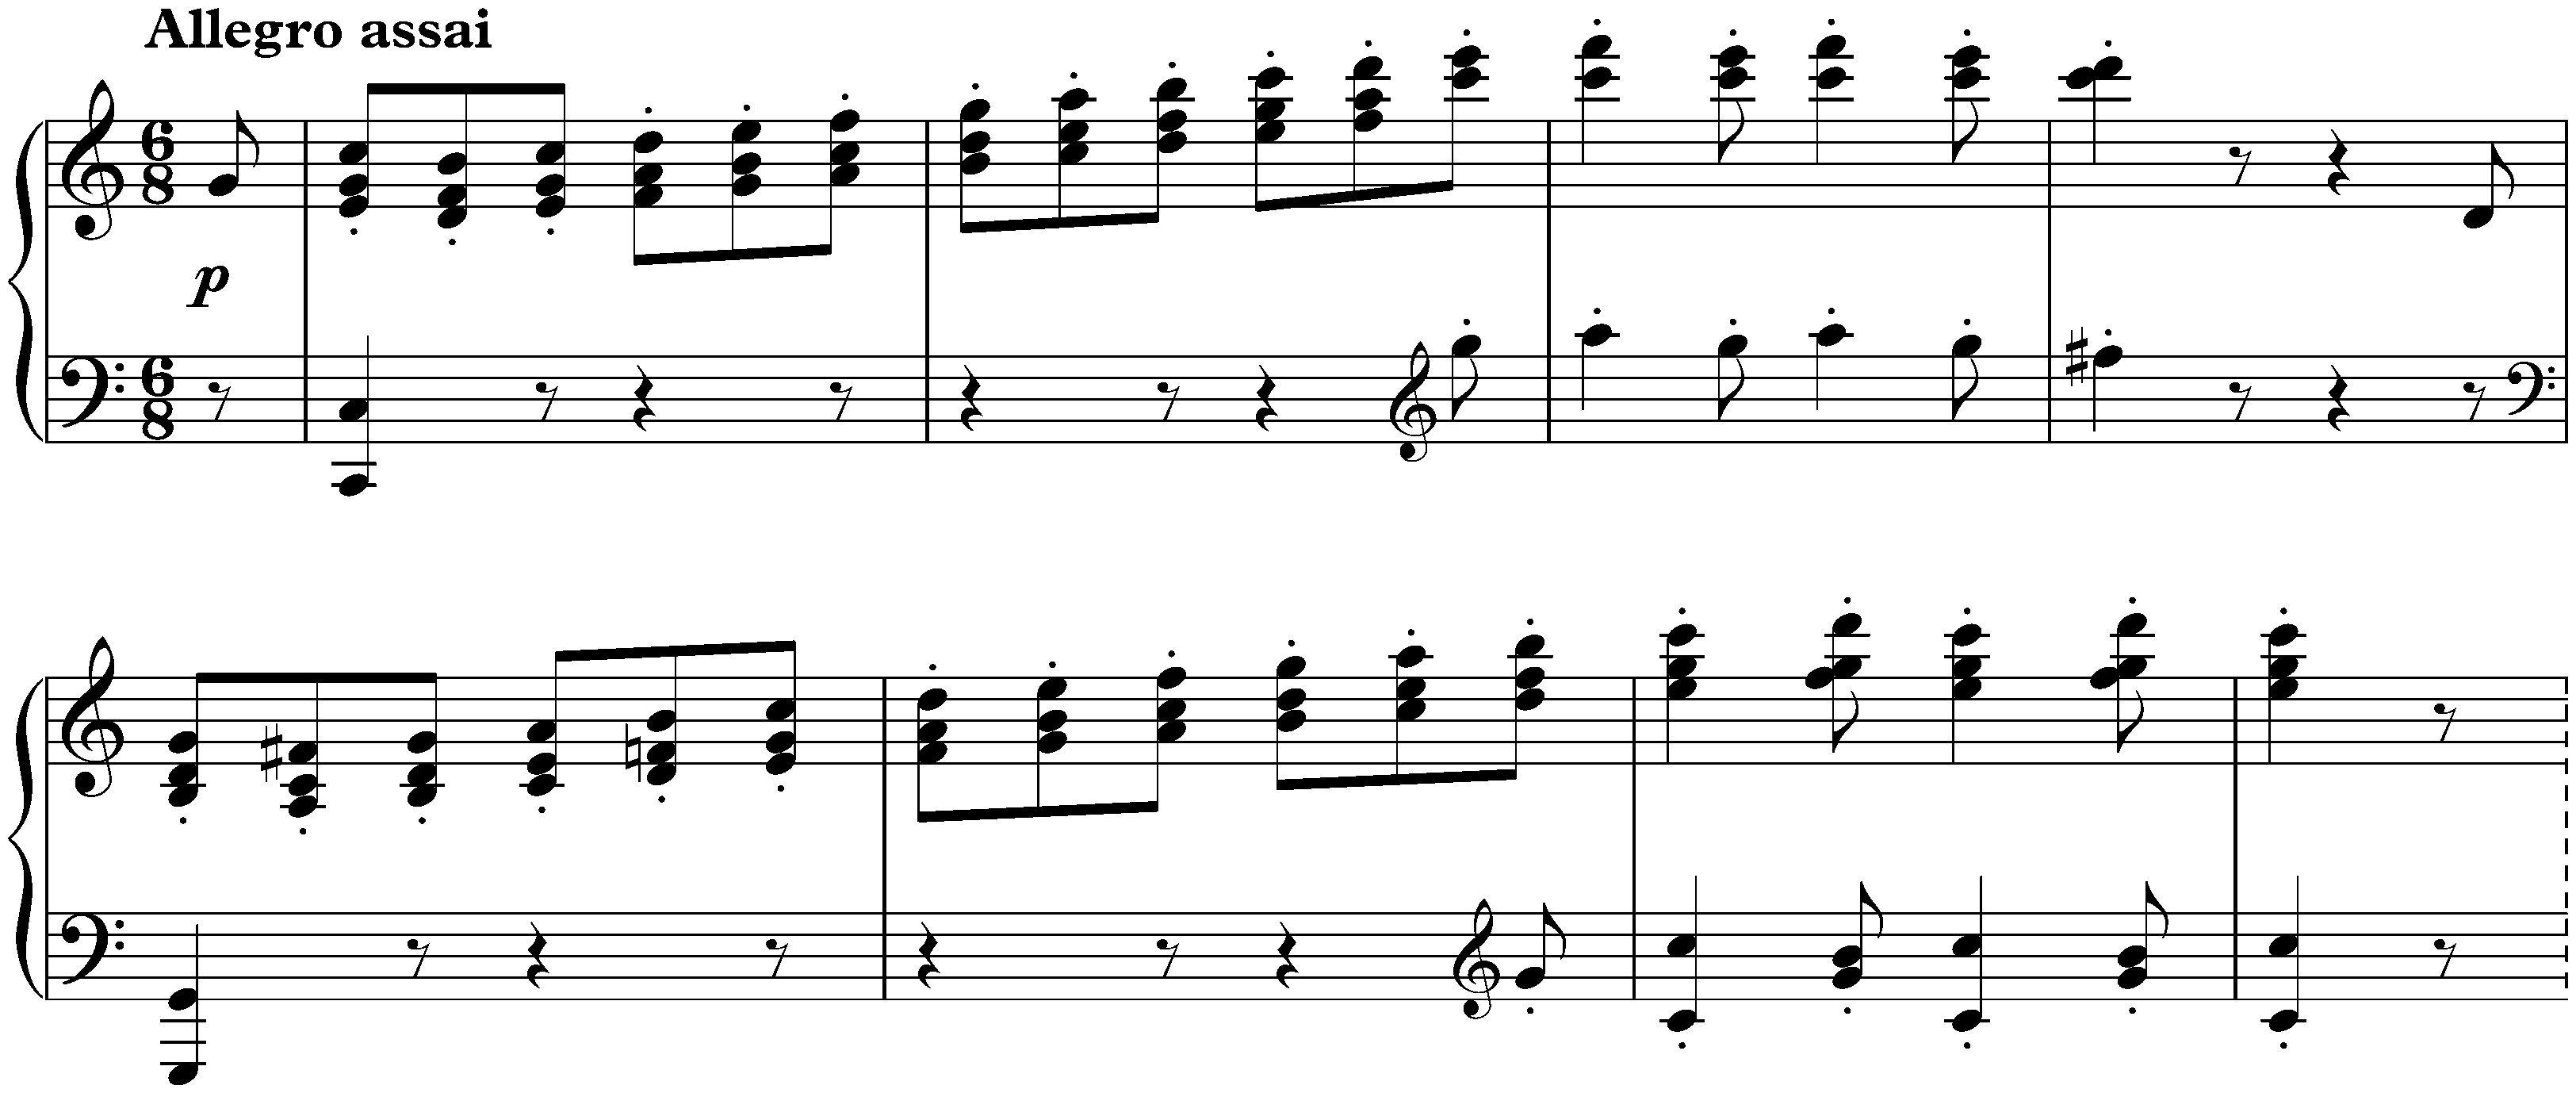 Sonata no. 3 in C major, op. 2 no. 3; 4. Allegro assai